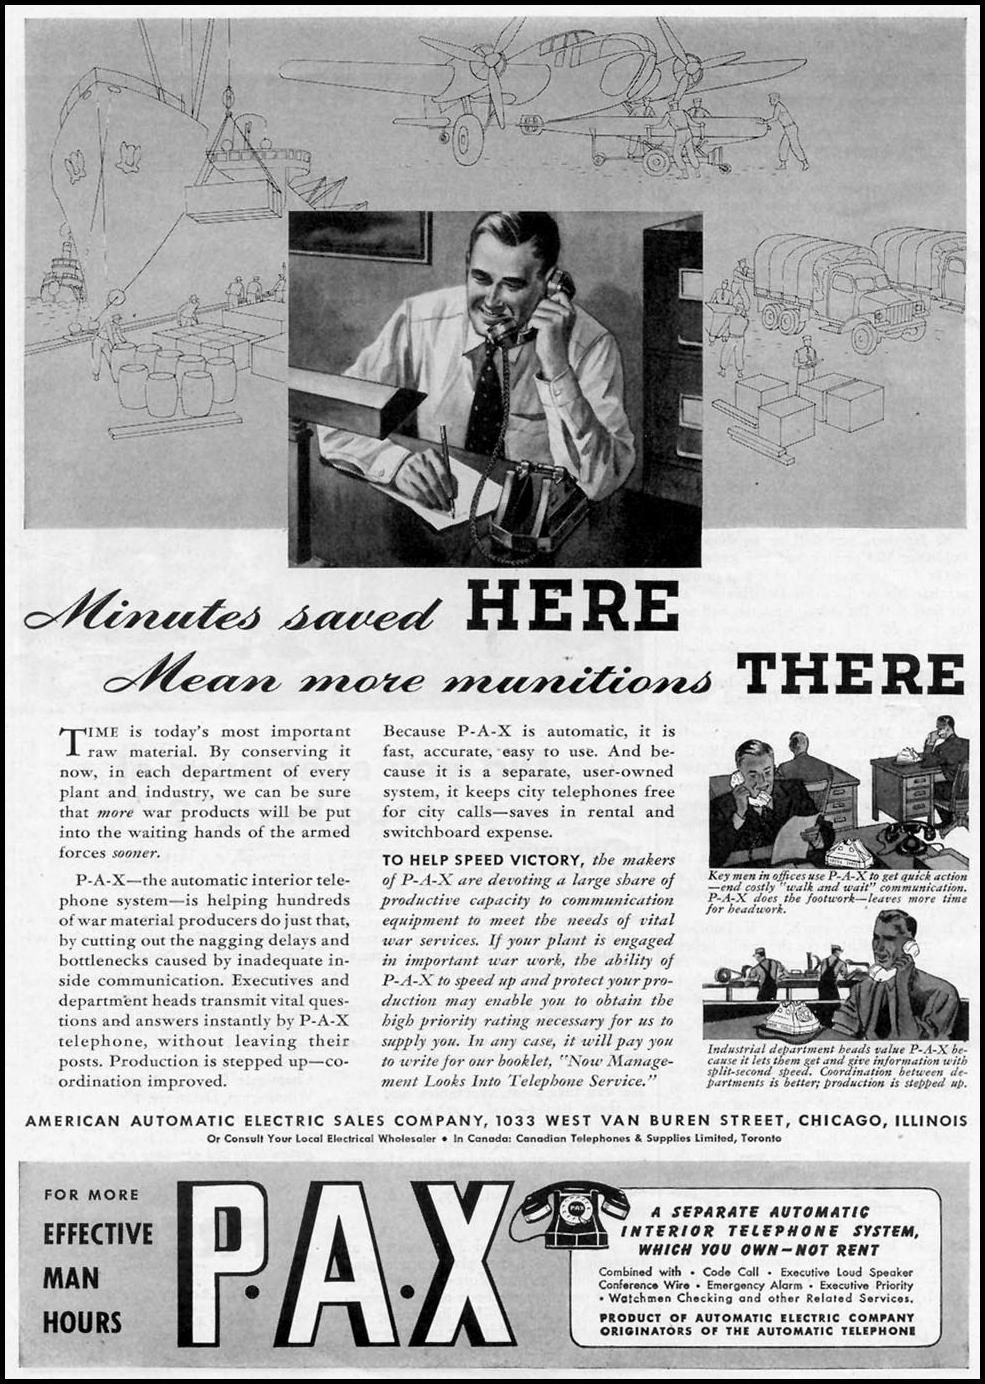 PAX INTERNAL TELEPHONE SYSTEM
TIME
08/17/1942
p. 68